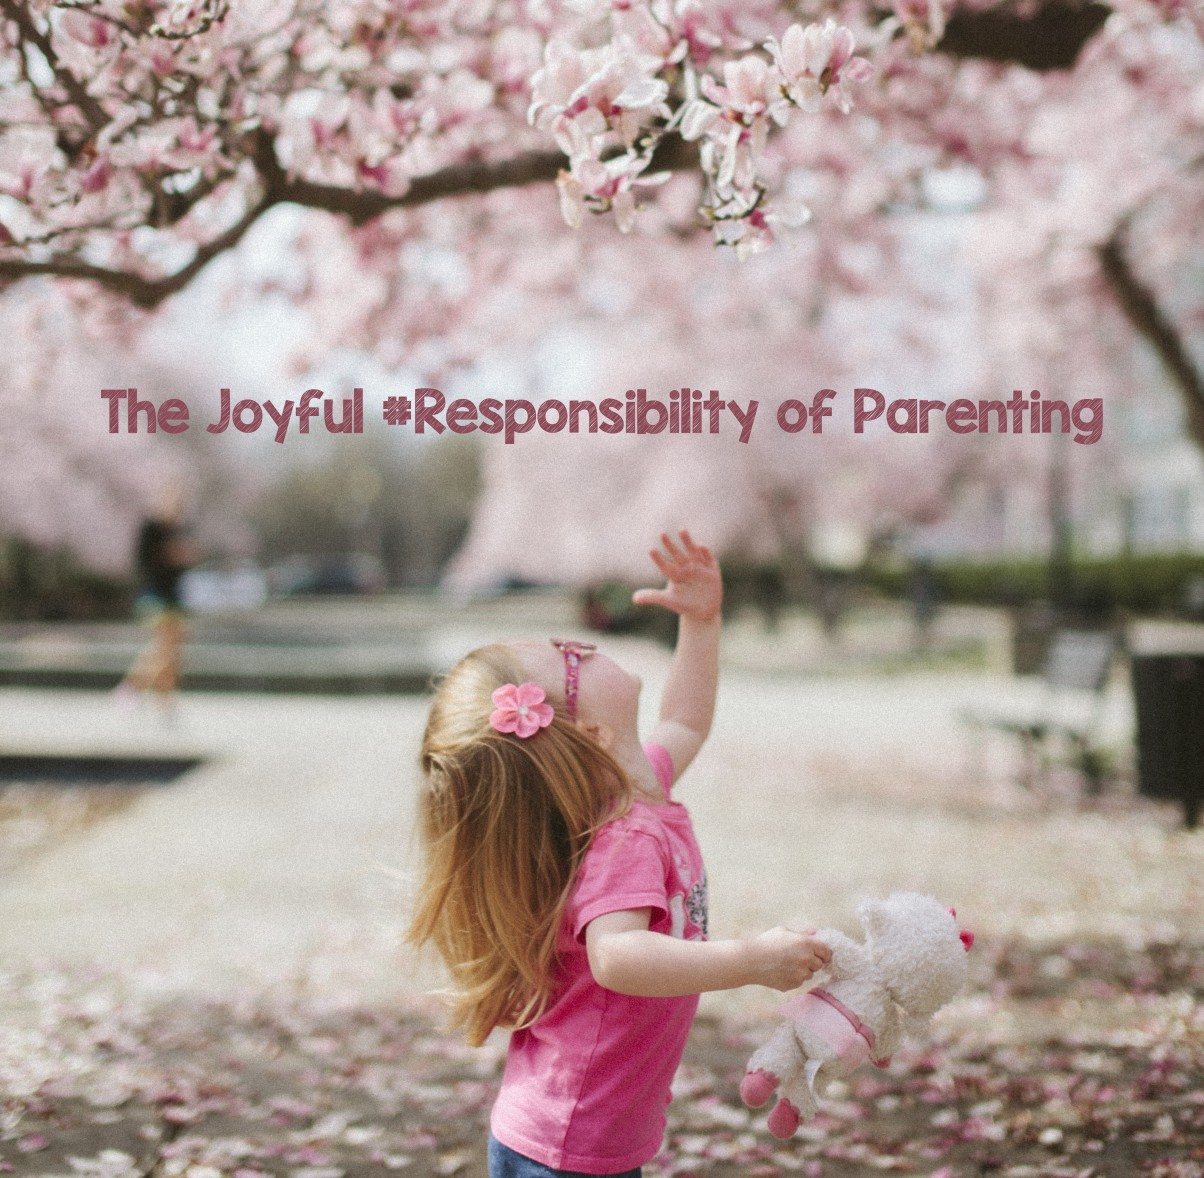 The Joyful #Responsibility of Parenting